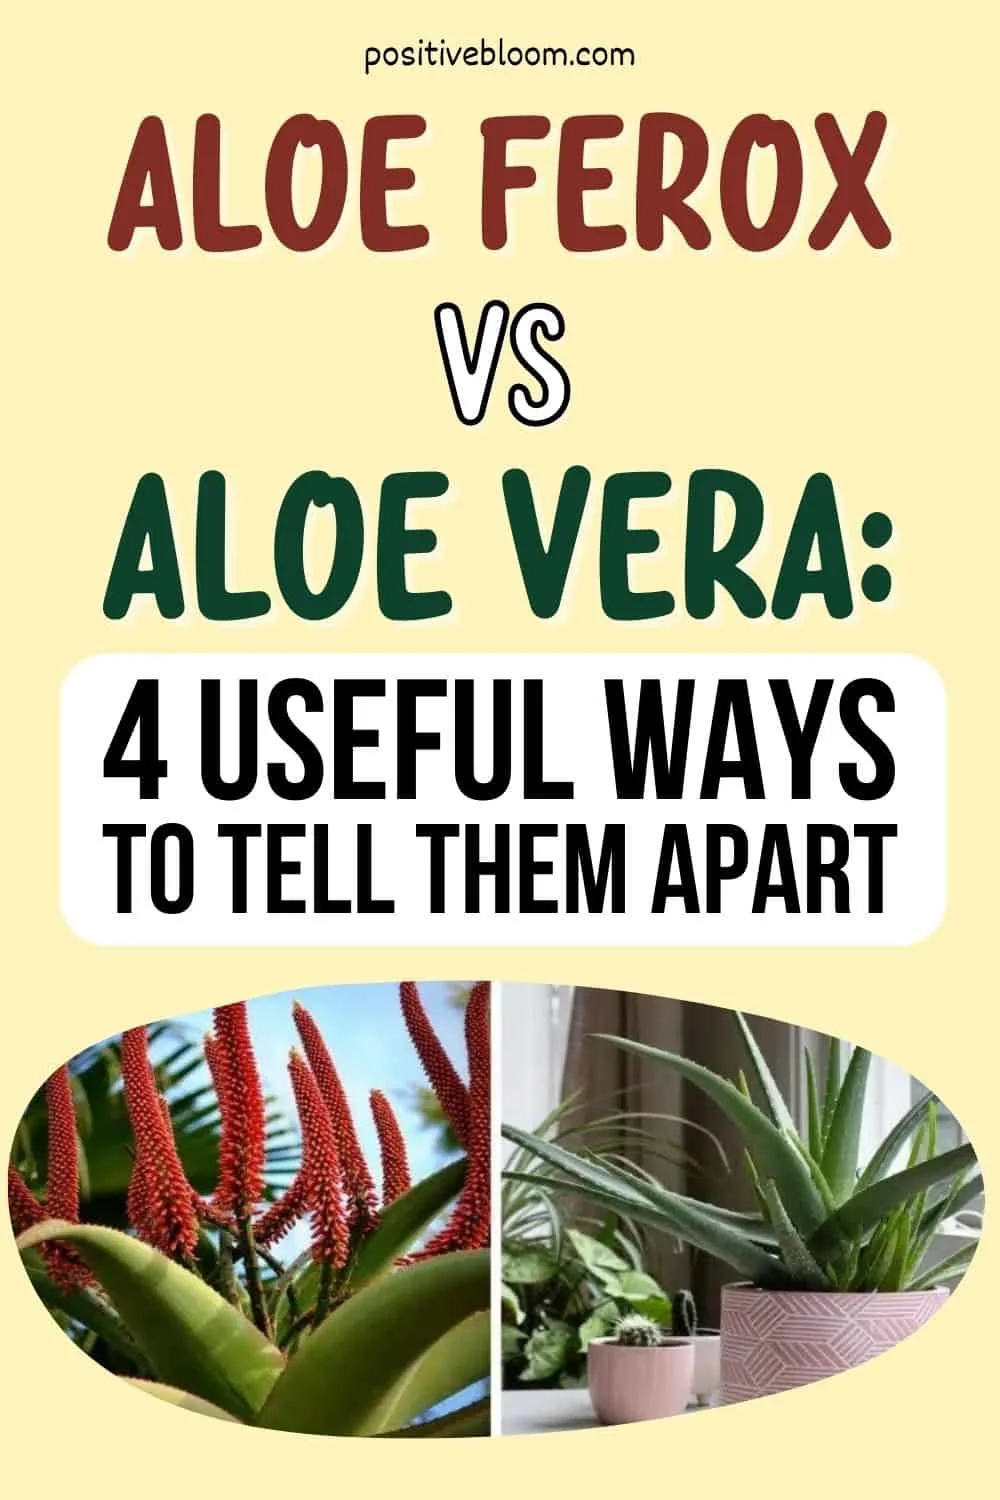 Aloe Ferox vs Aloe Vera 4 Useful Ways To Tell Them Apart Pinterest